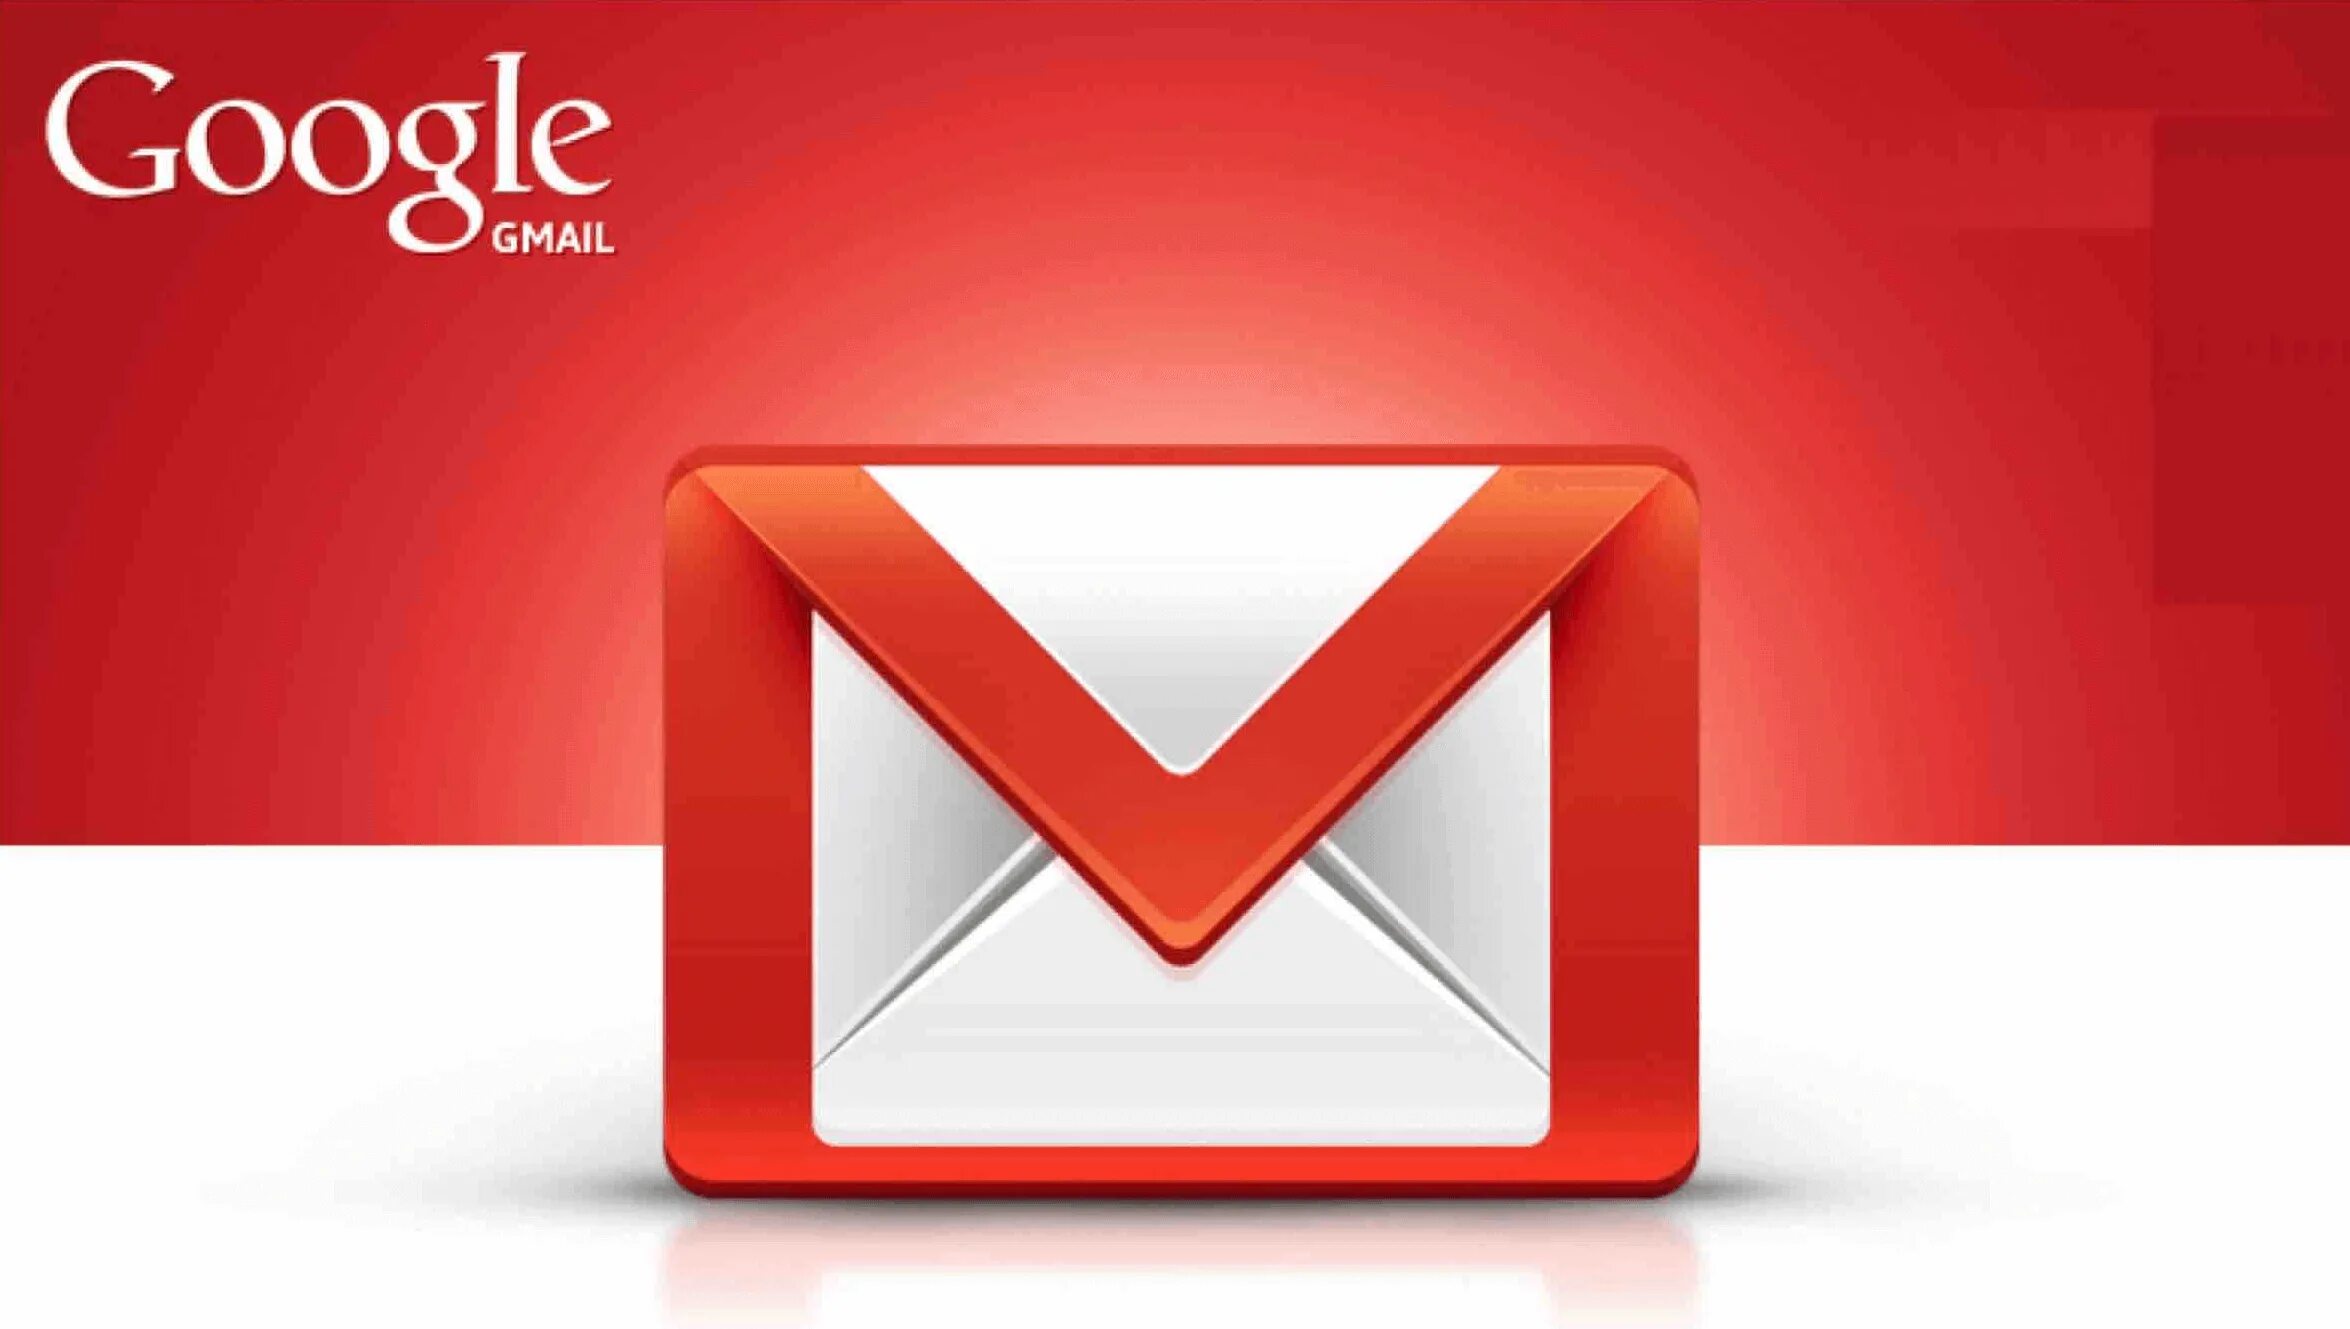 Ооо gmail. Wagtail. Гугл почта. Логотип gmail почты.